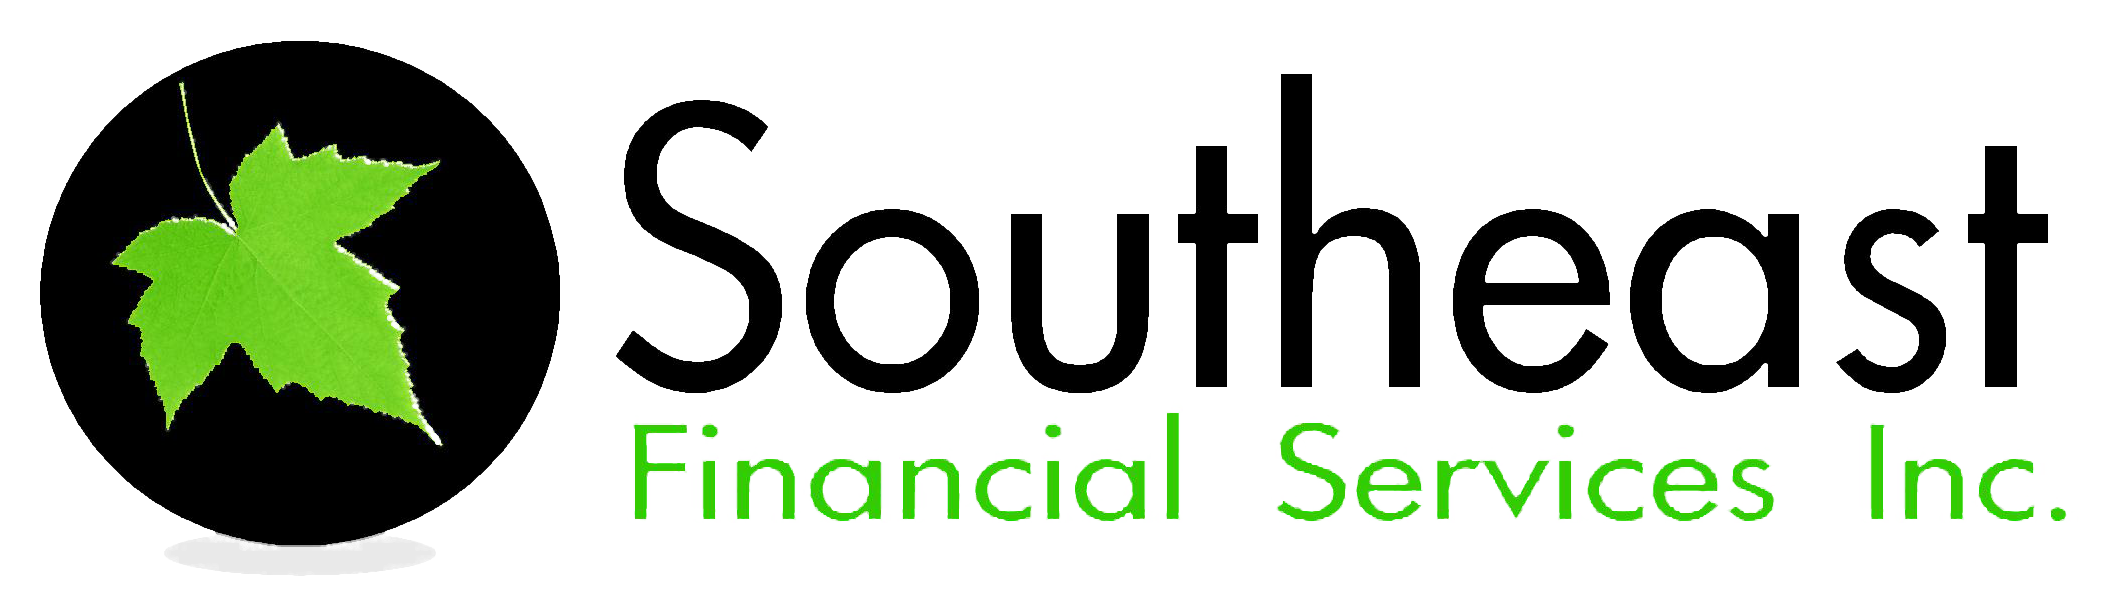 Southeast Financial Services Inc.